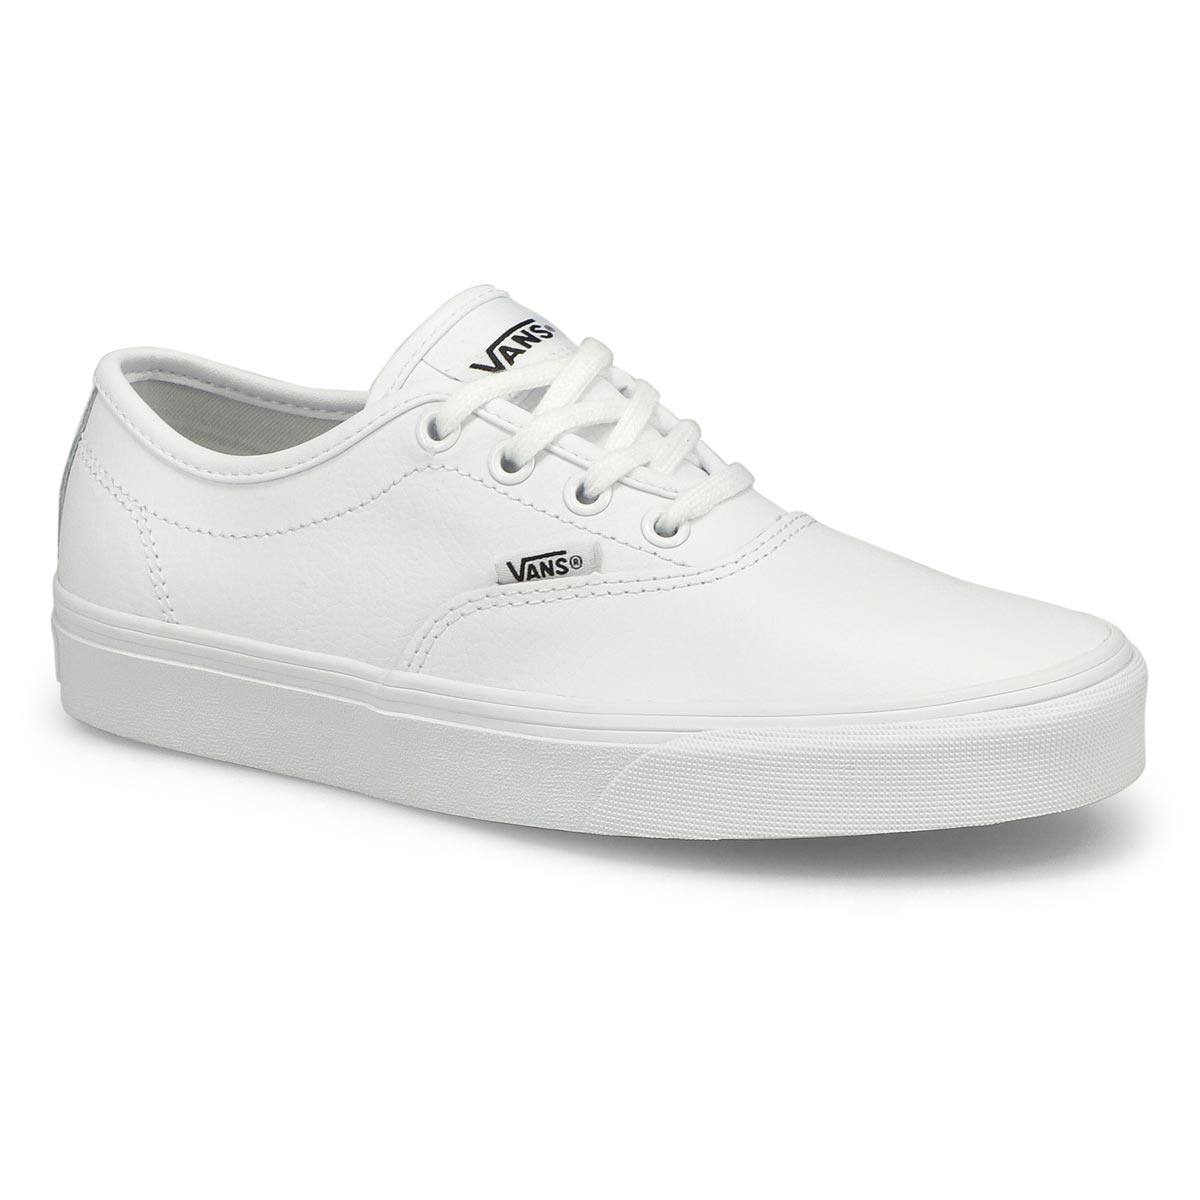 vans white shoes price